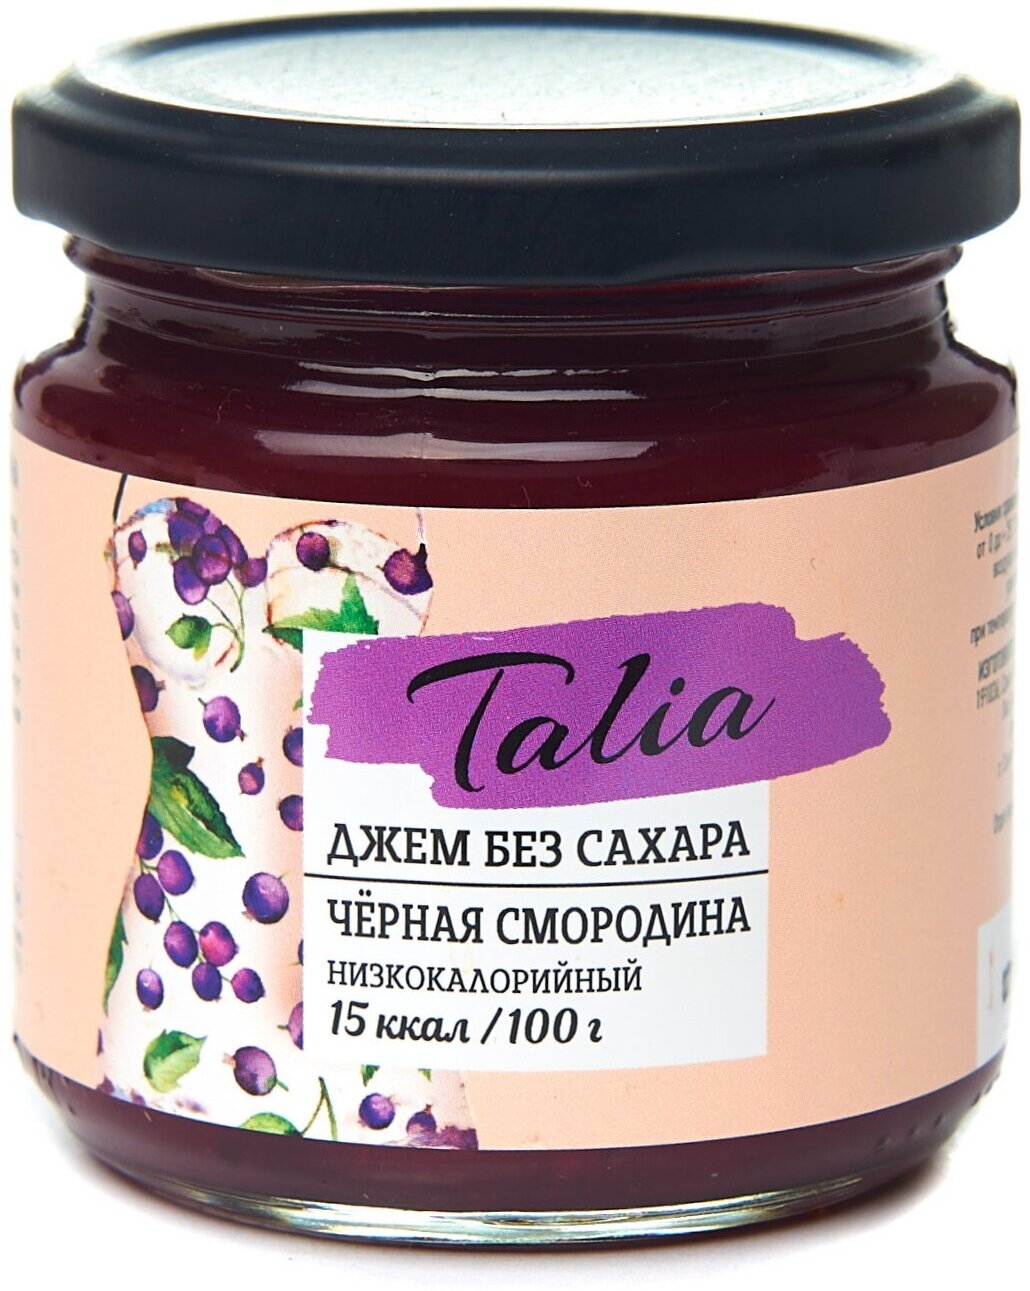 Джем zero без сахара низкокалорийный "Talia" черная смородина, 180гр